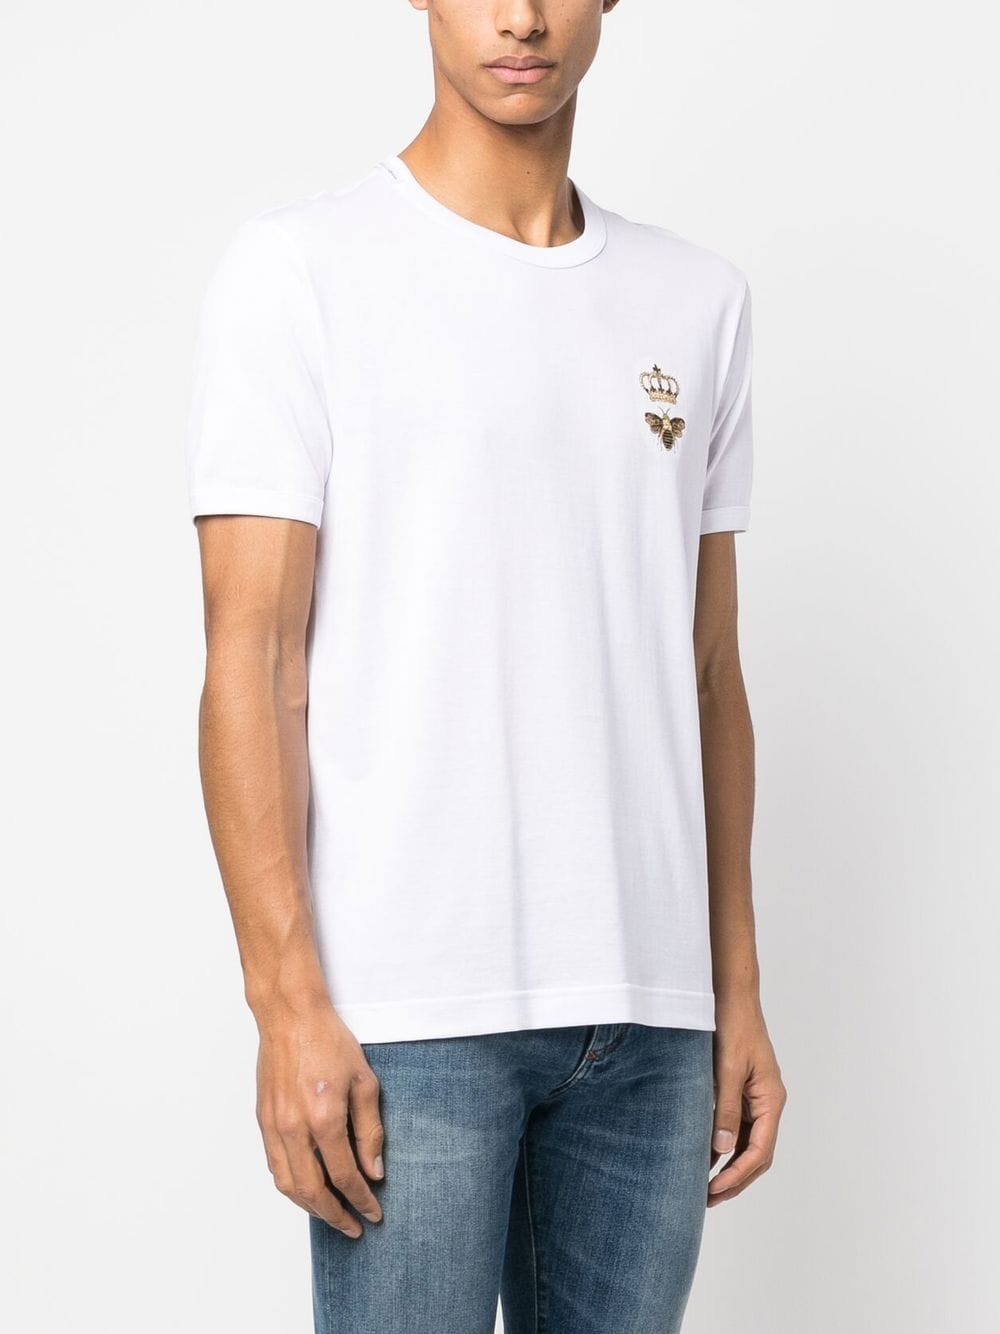 crown logo white t-shirt